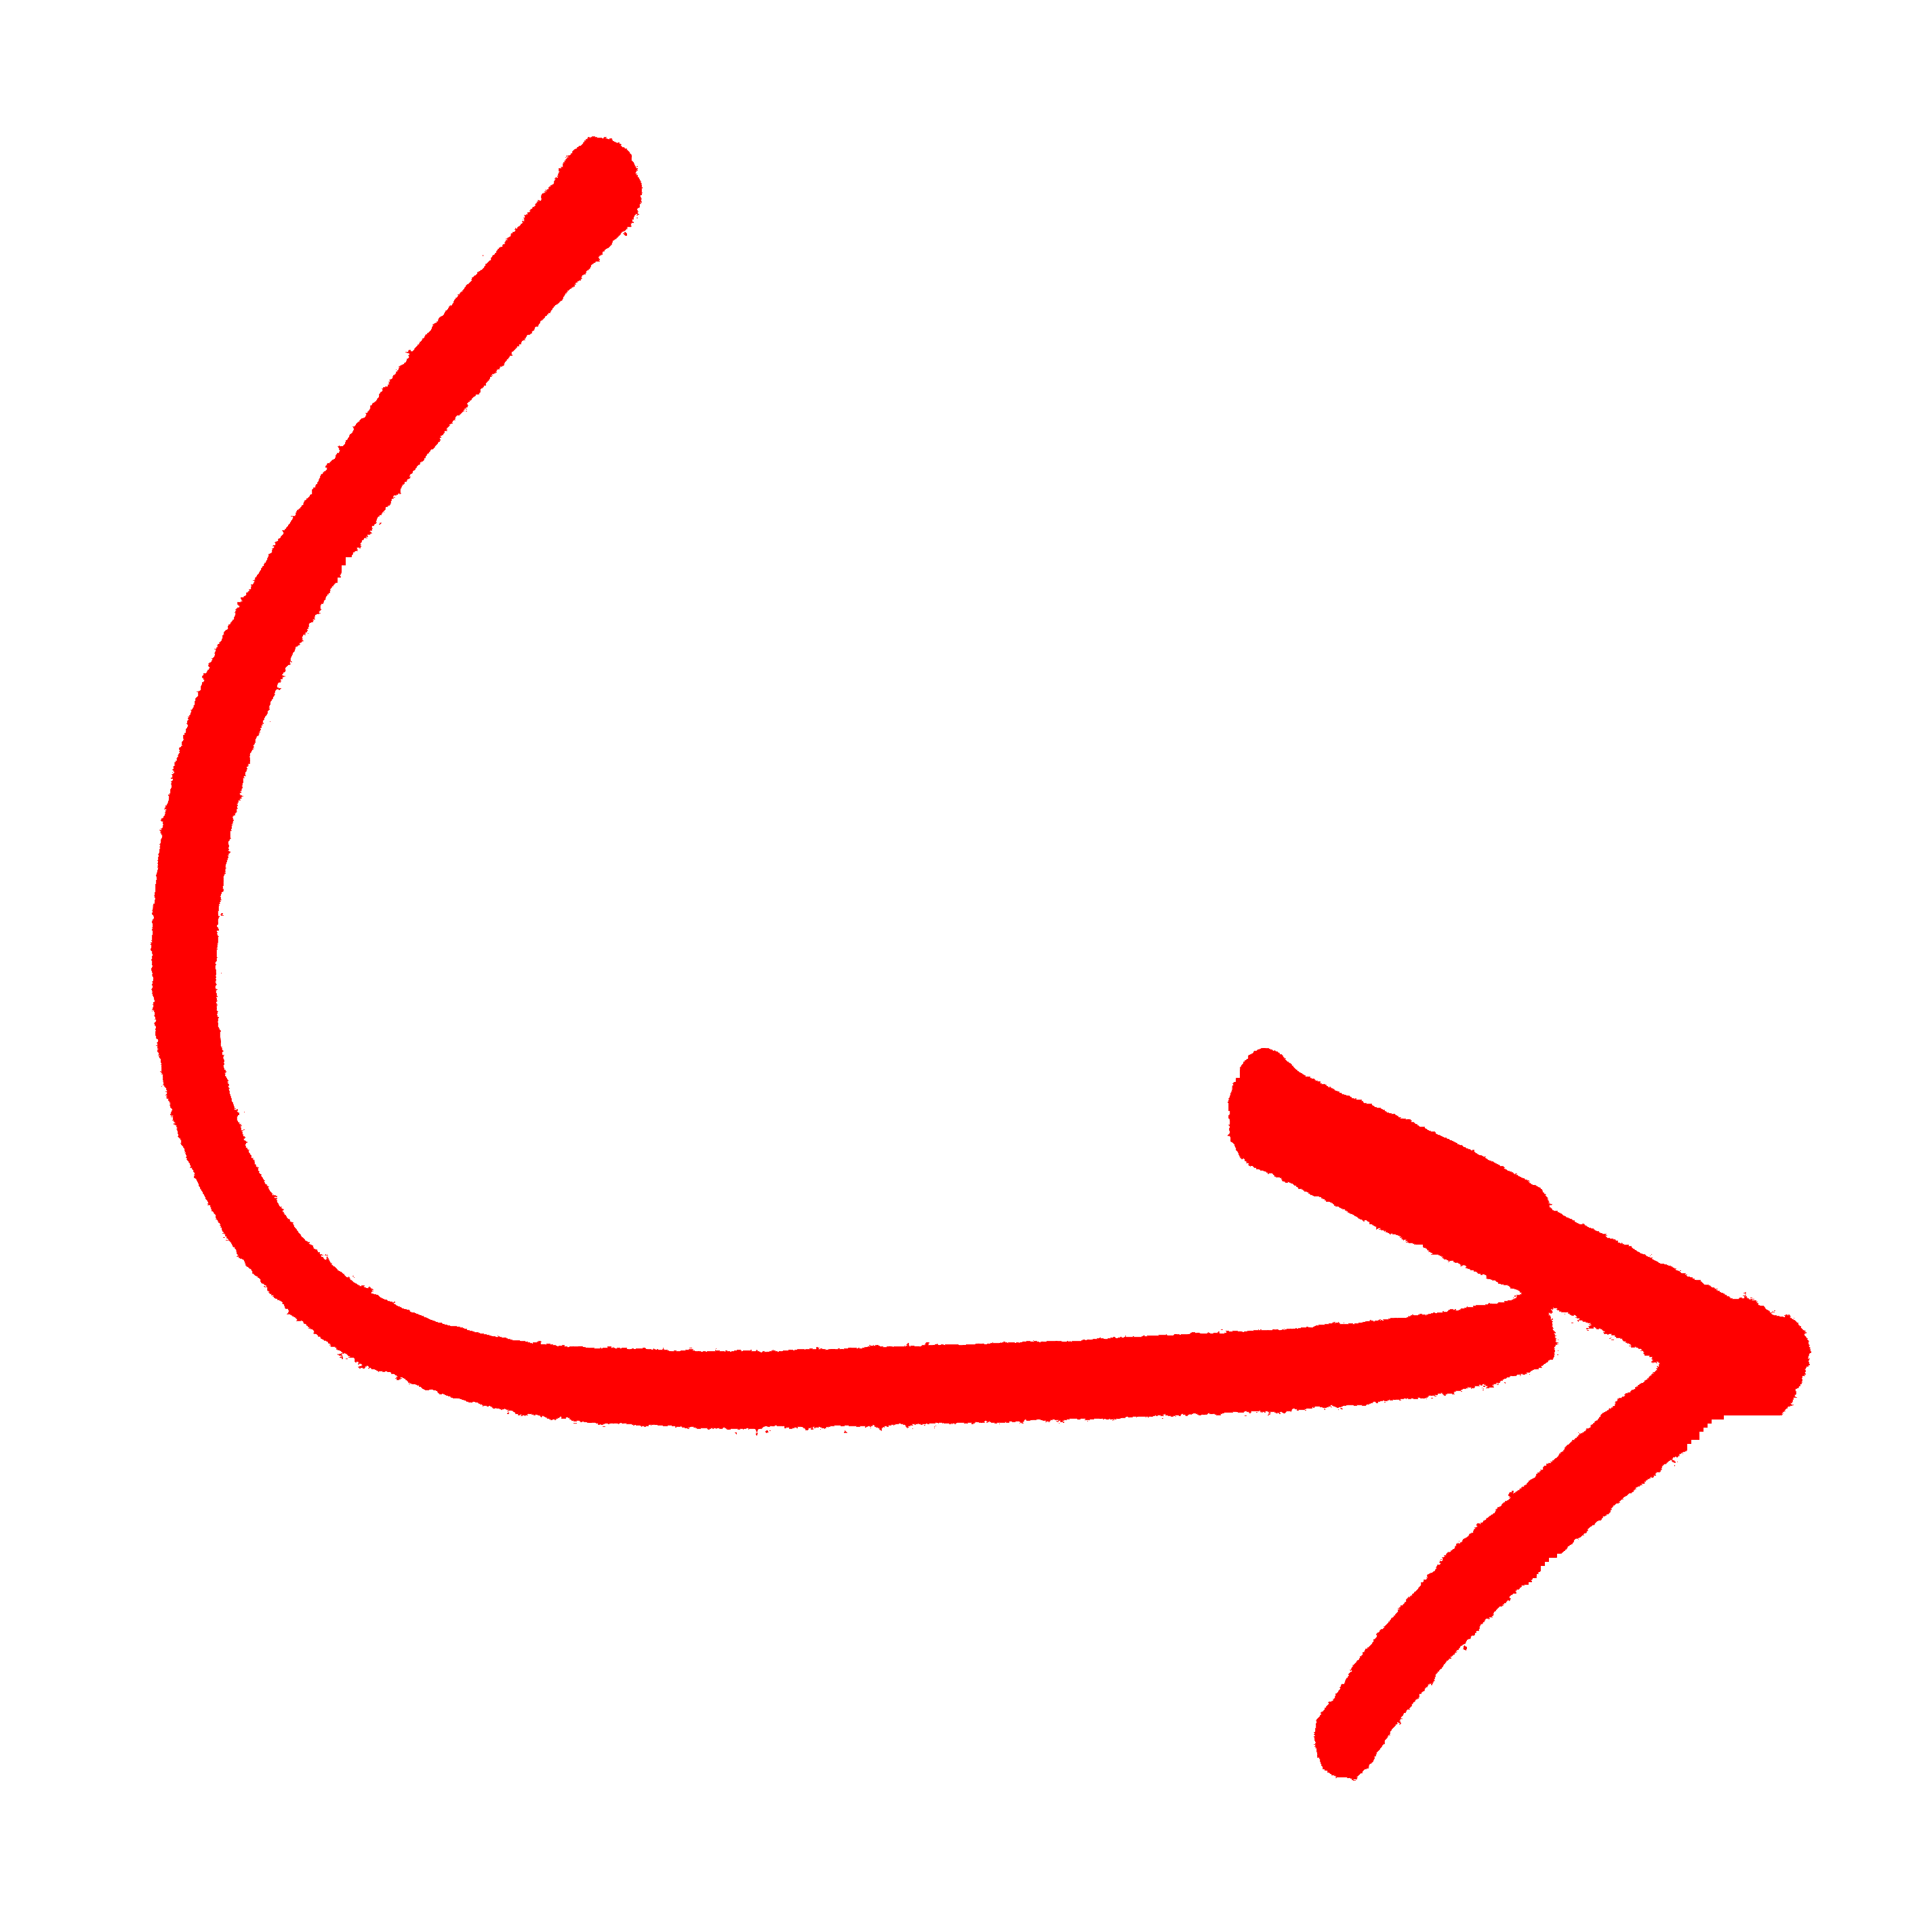 curved arrow shape photoshop download